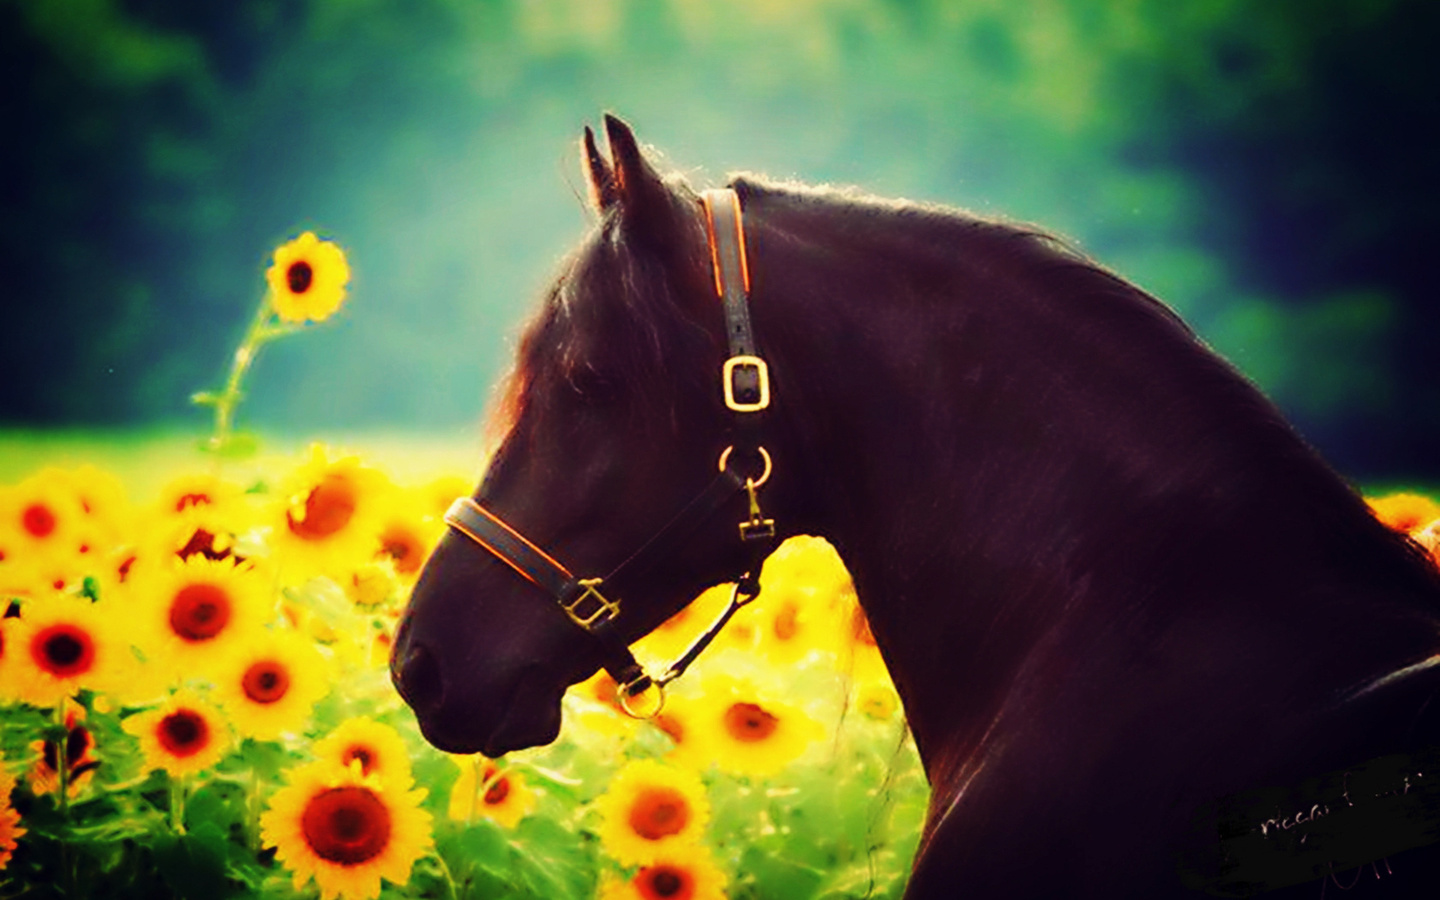 sunflower, flowers, effects, animal, sun, beautiful, horse